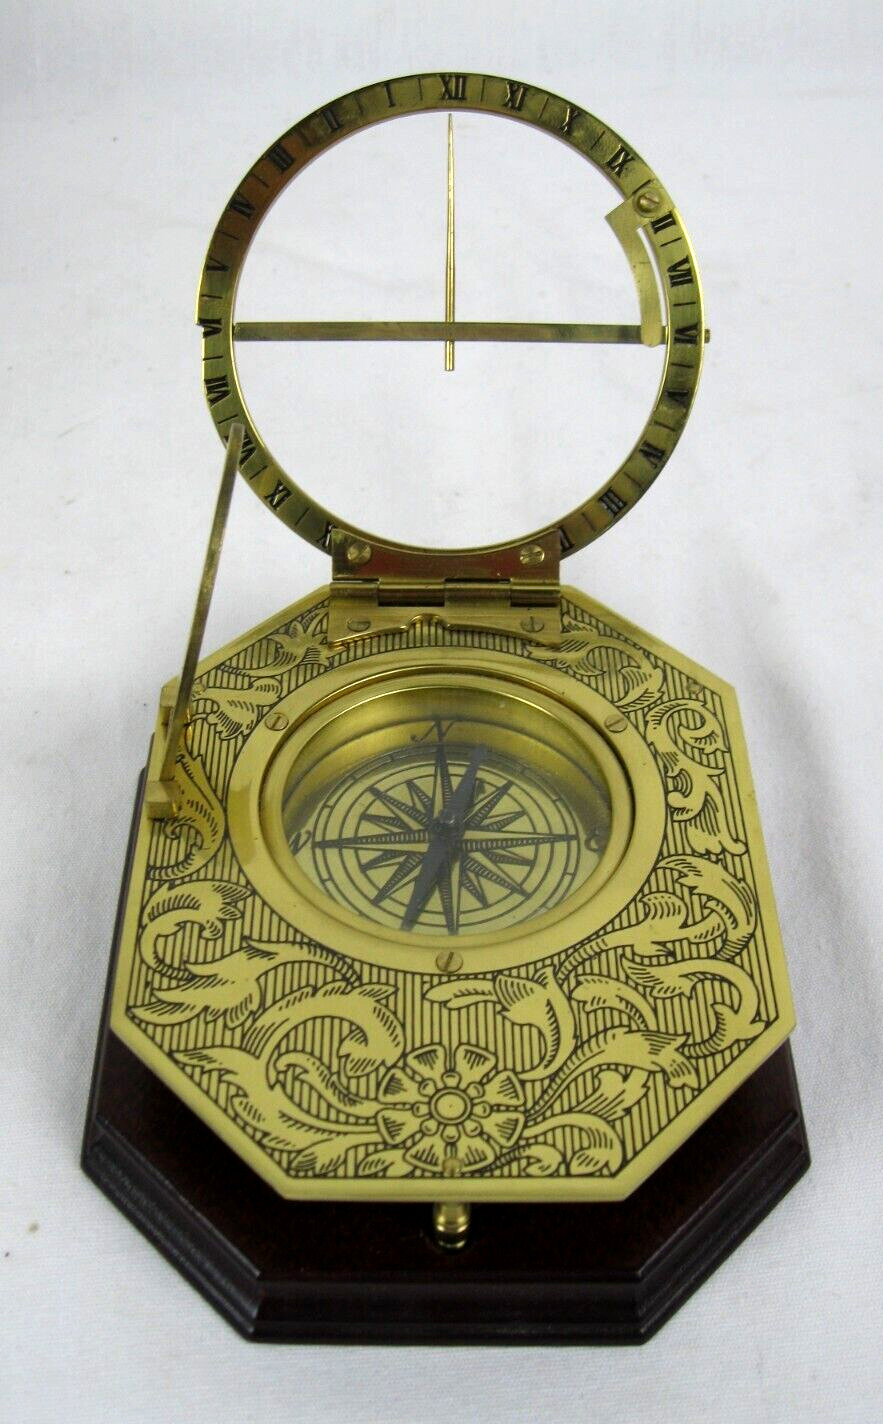 Universal Equinoctial Sundial, Franklin MInt, 1987, w COA, With Original box